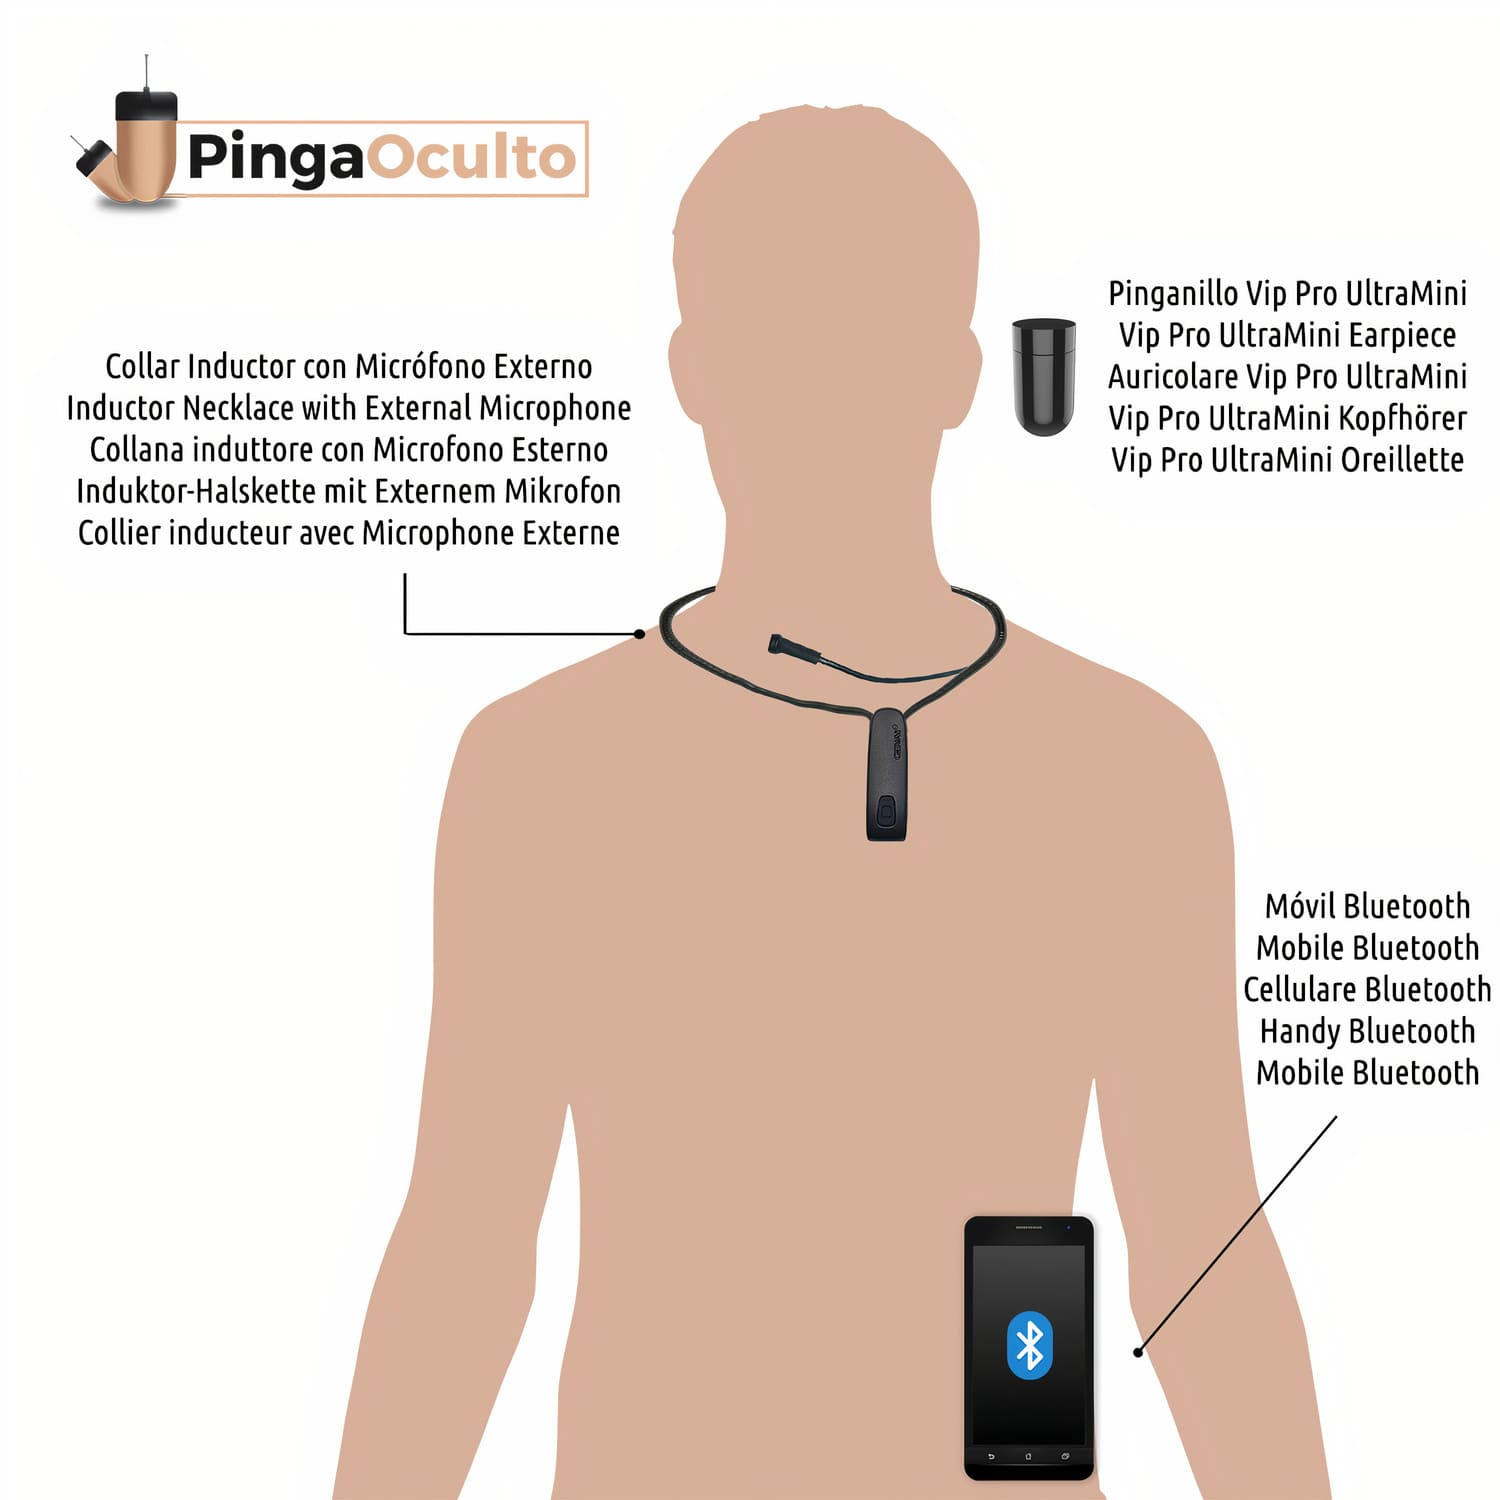 Pinganillo Vip Pro UltraMini Bluetooth - PingaOculto ®